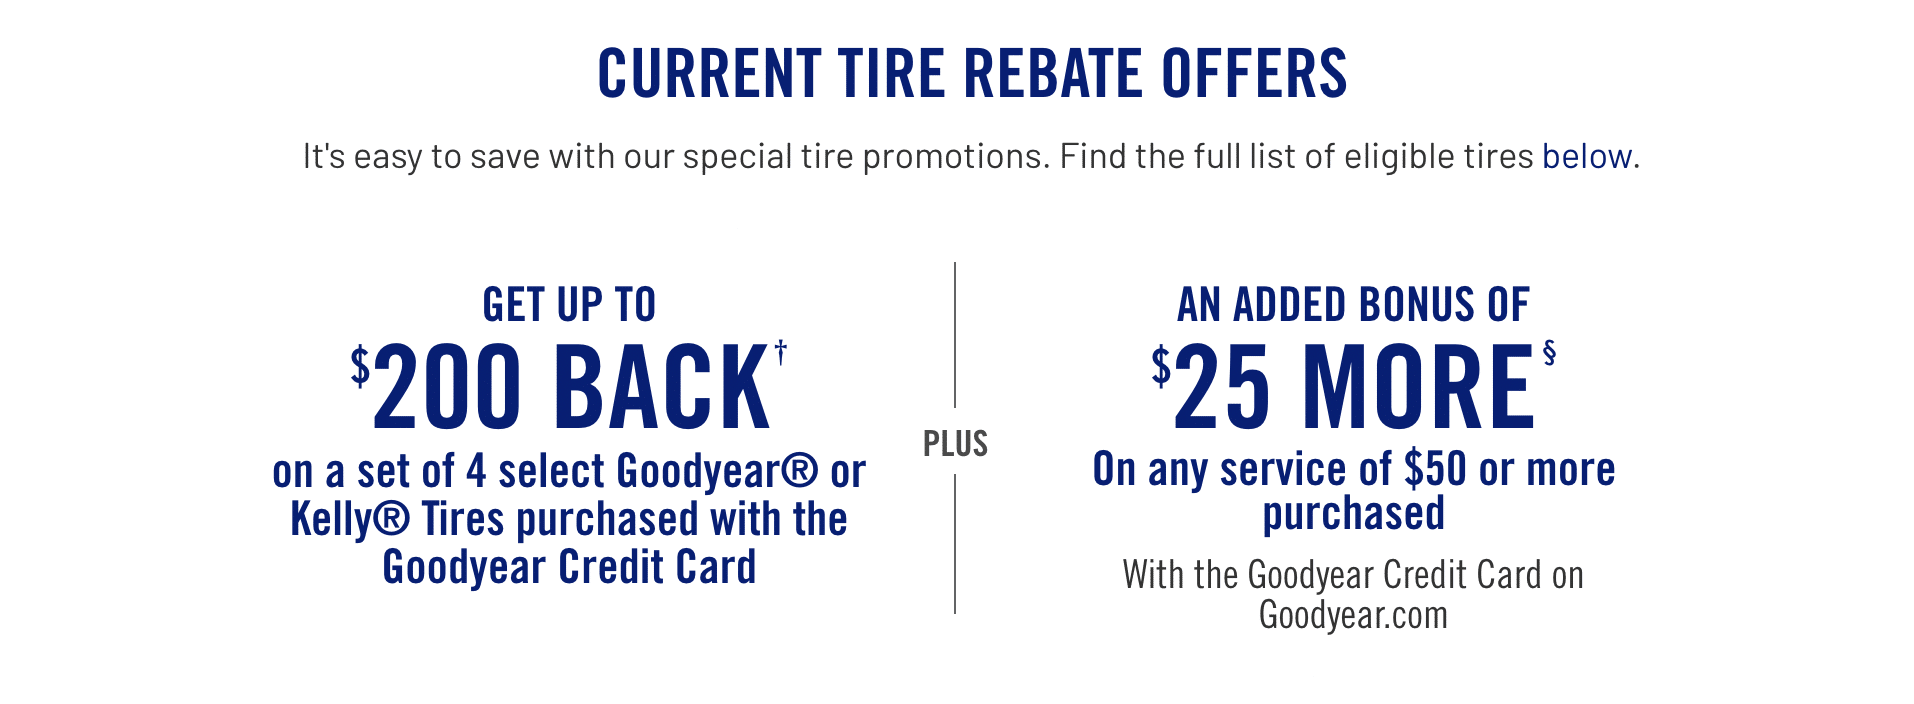 Goodyear Rebate Offer